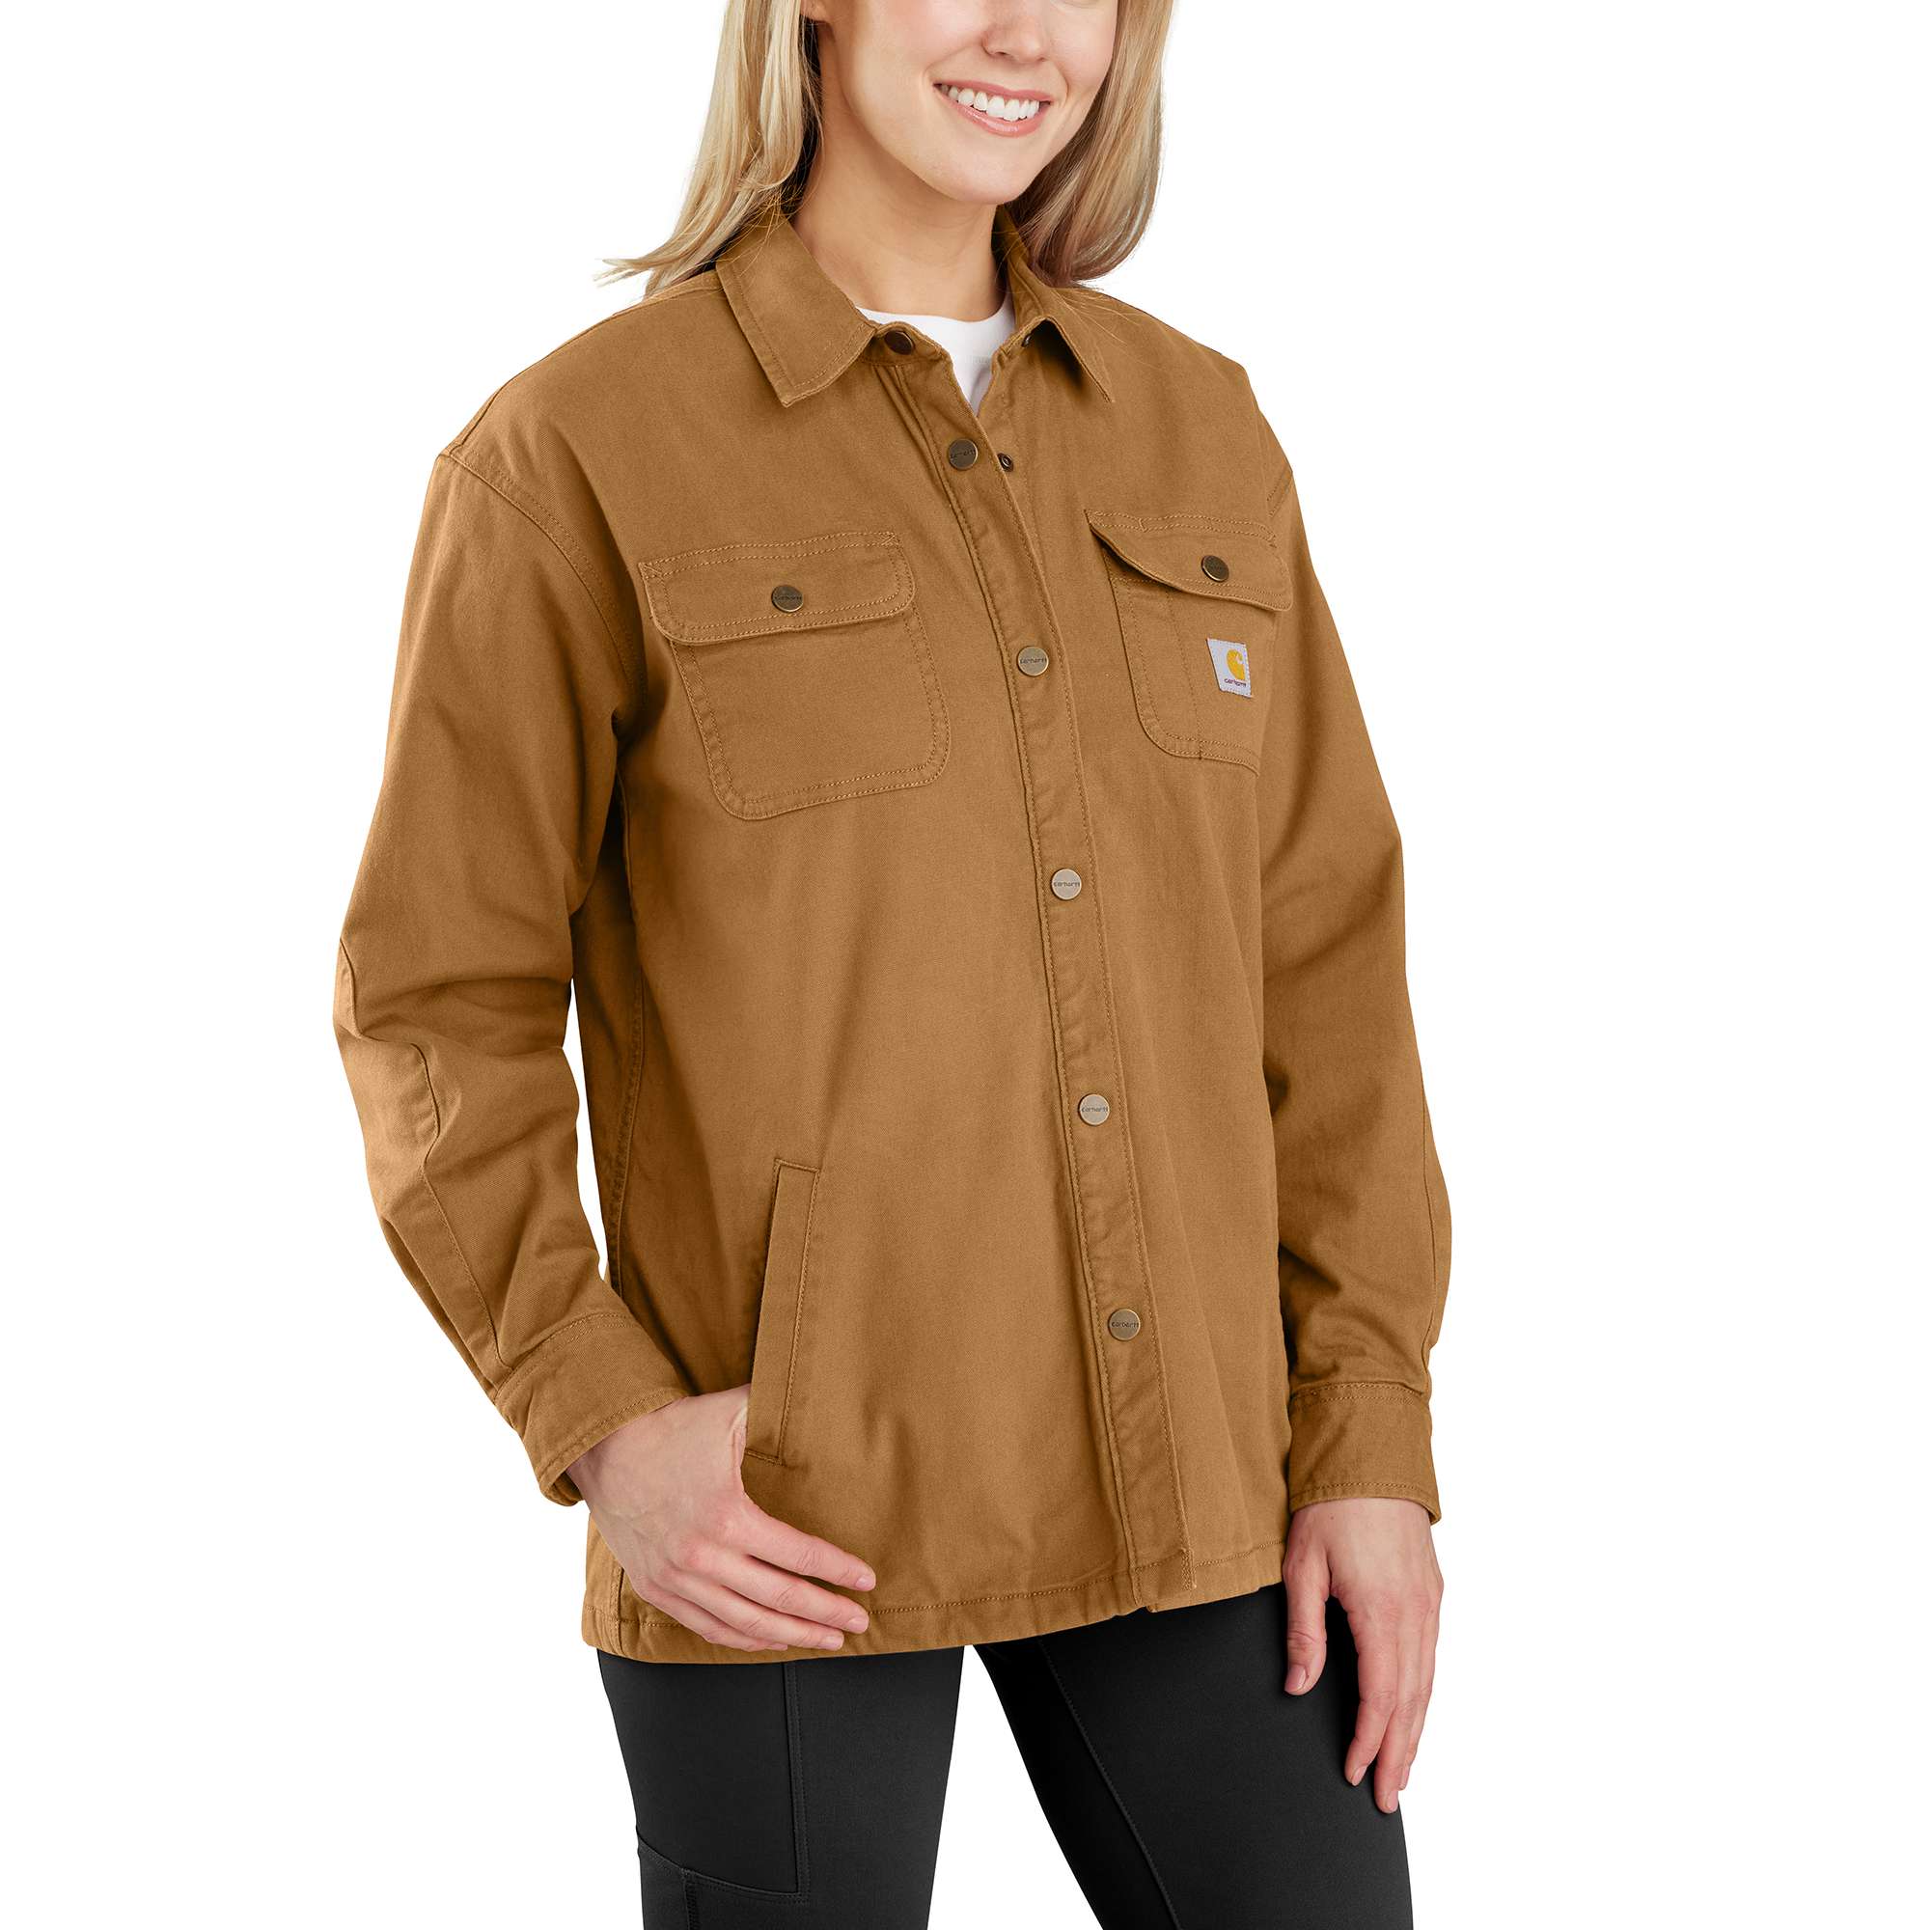 Carhartt Company Shirts & Custom Gear Work Uniform Shirts | Embroidered